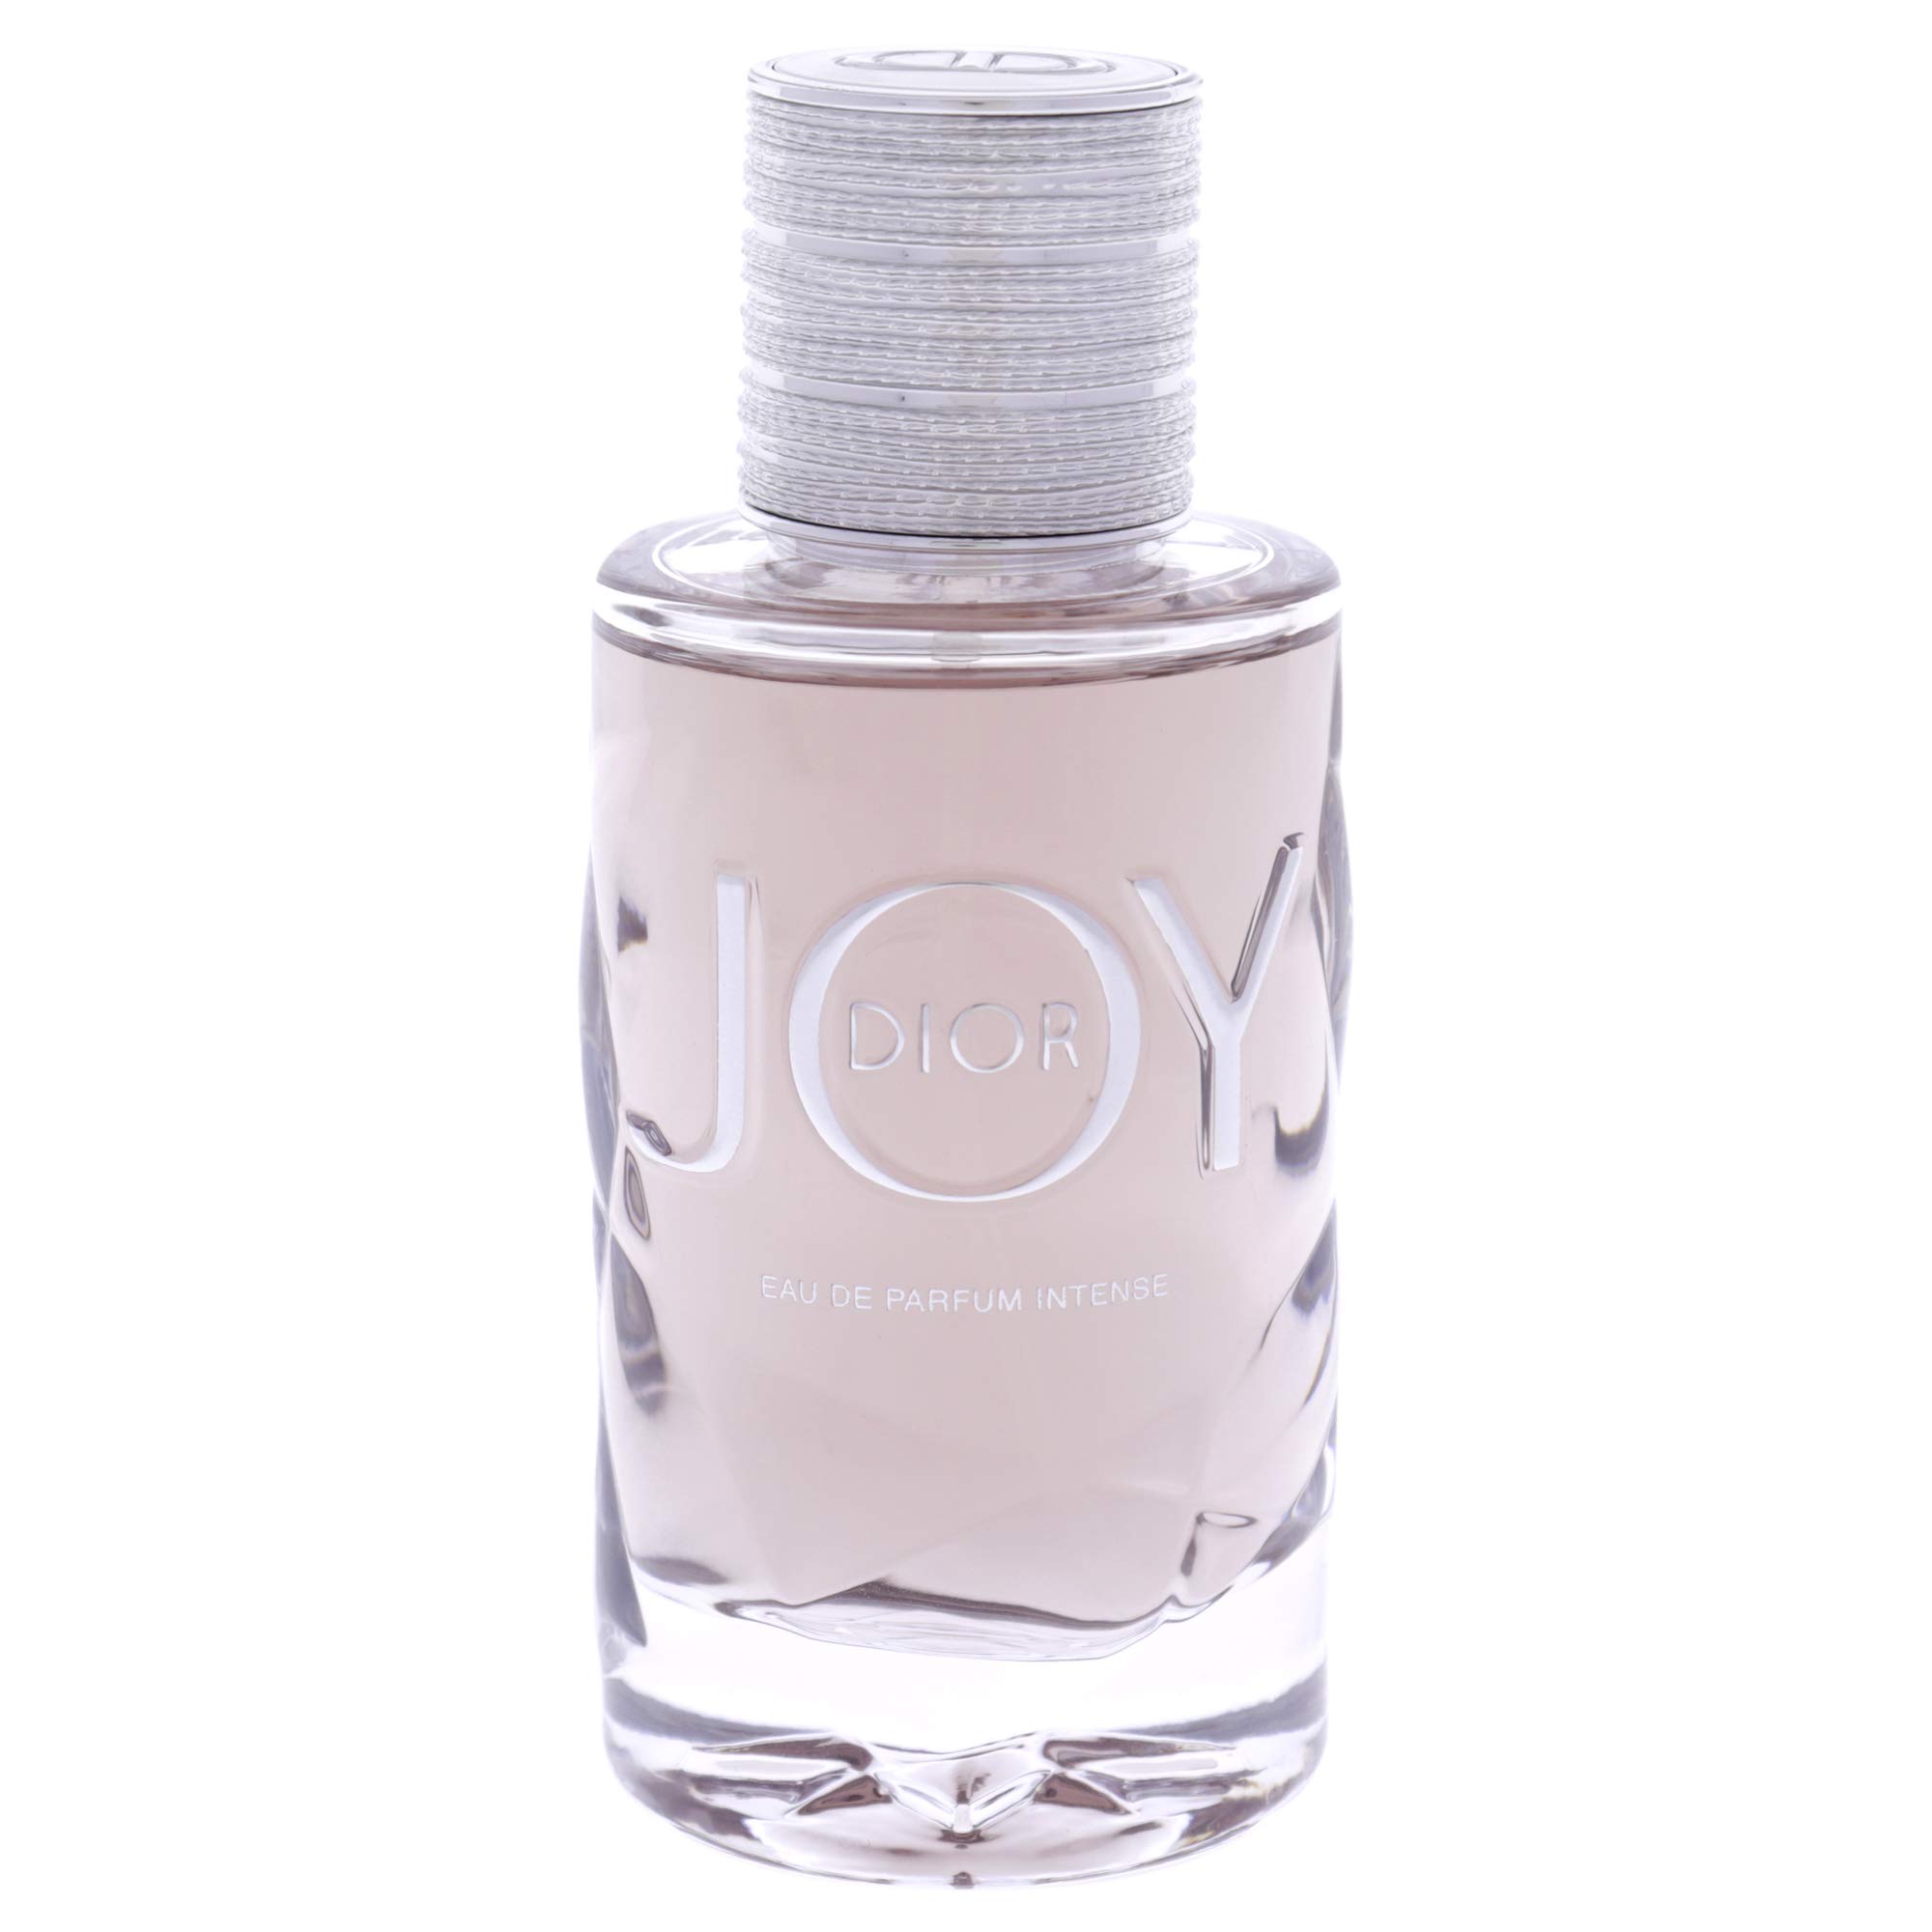 Nước hoa Dior Joy Eau de Parfume Intense  namperfume